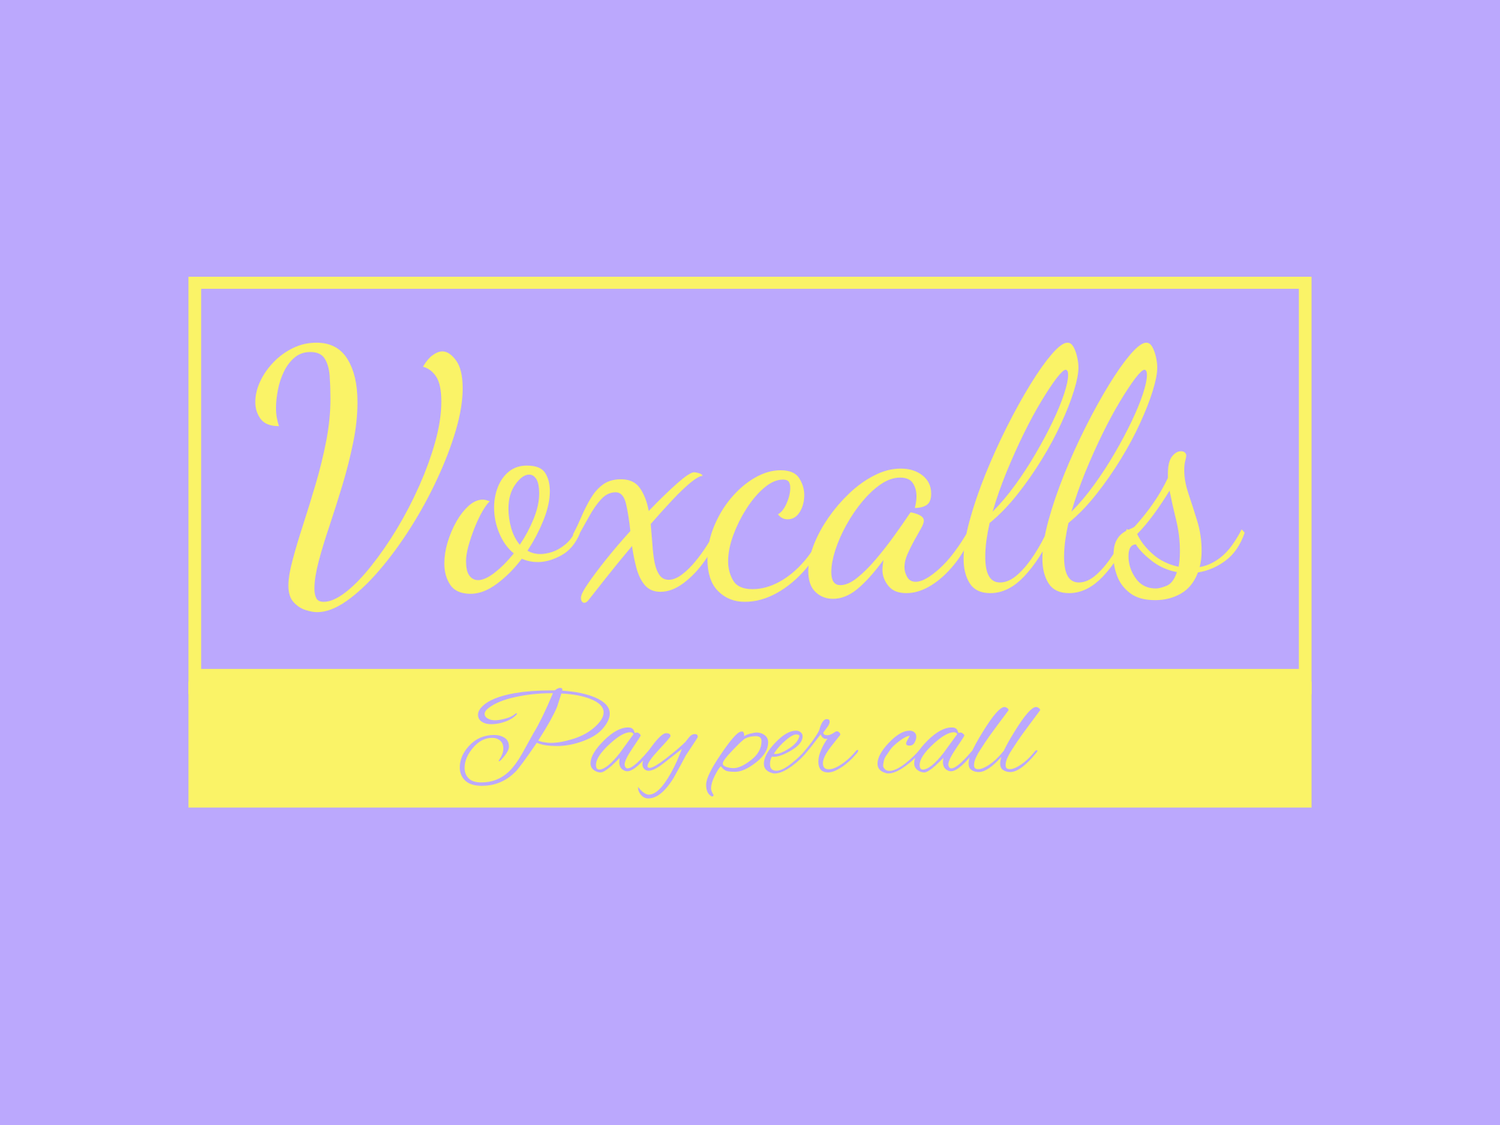 Voxcalls